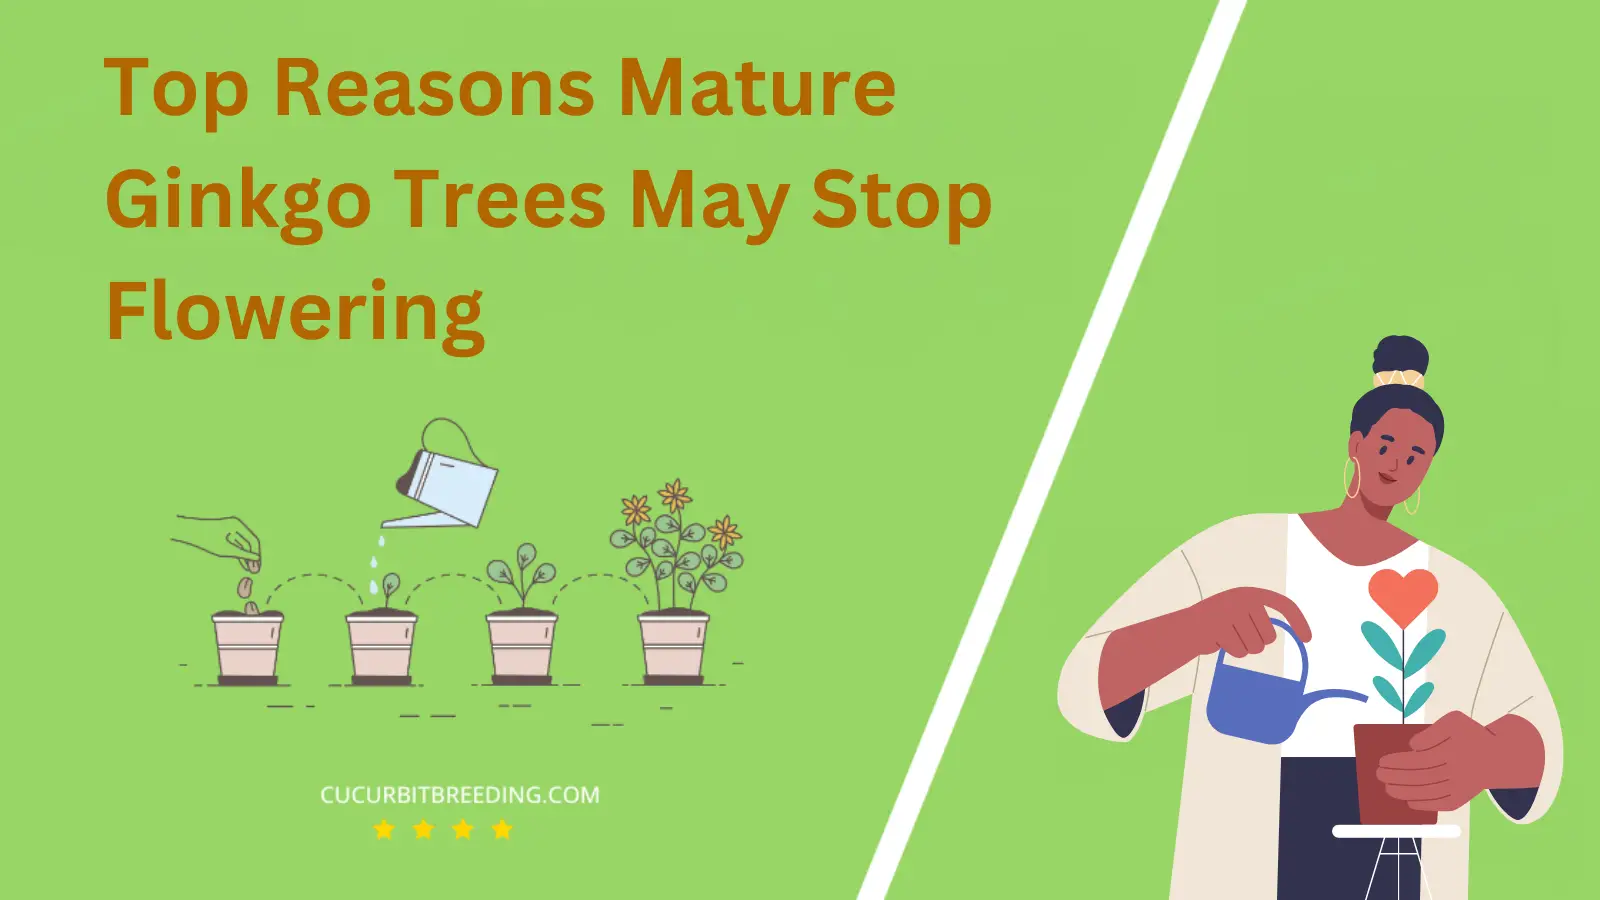 Top Reasons Mature Ginkgo Trees May Stop Flowering